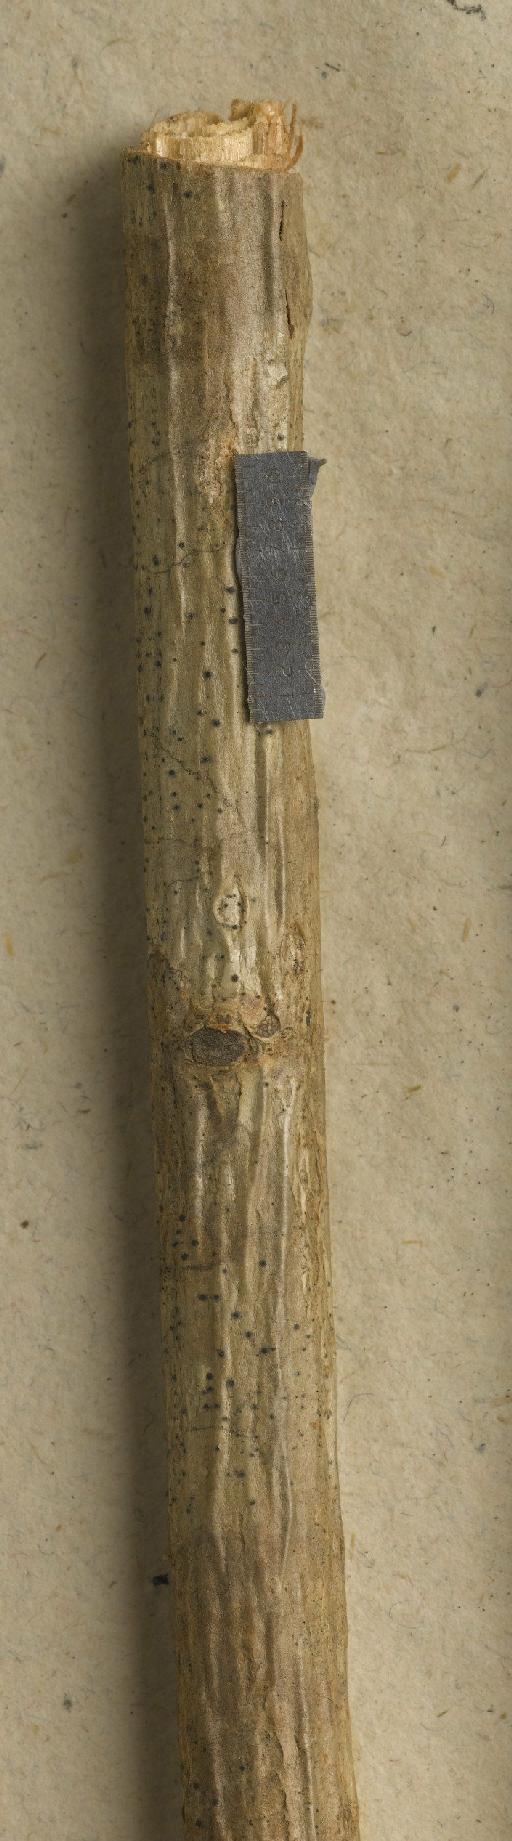 Arthopyrenia cinereopruinosa (Schaer.) A.Massal. - BM001107615_a